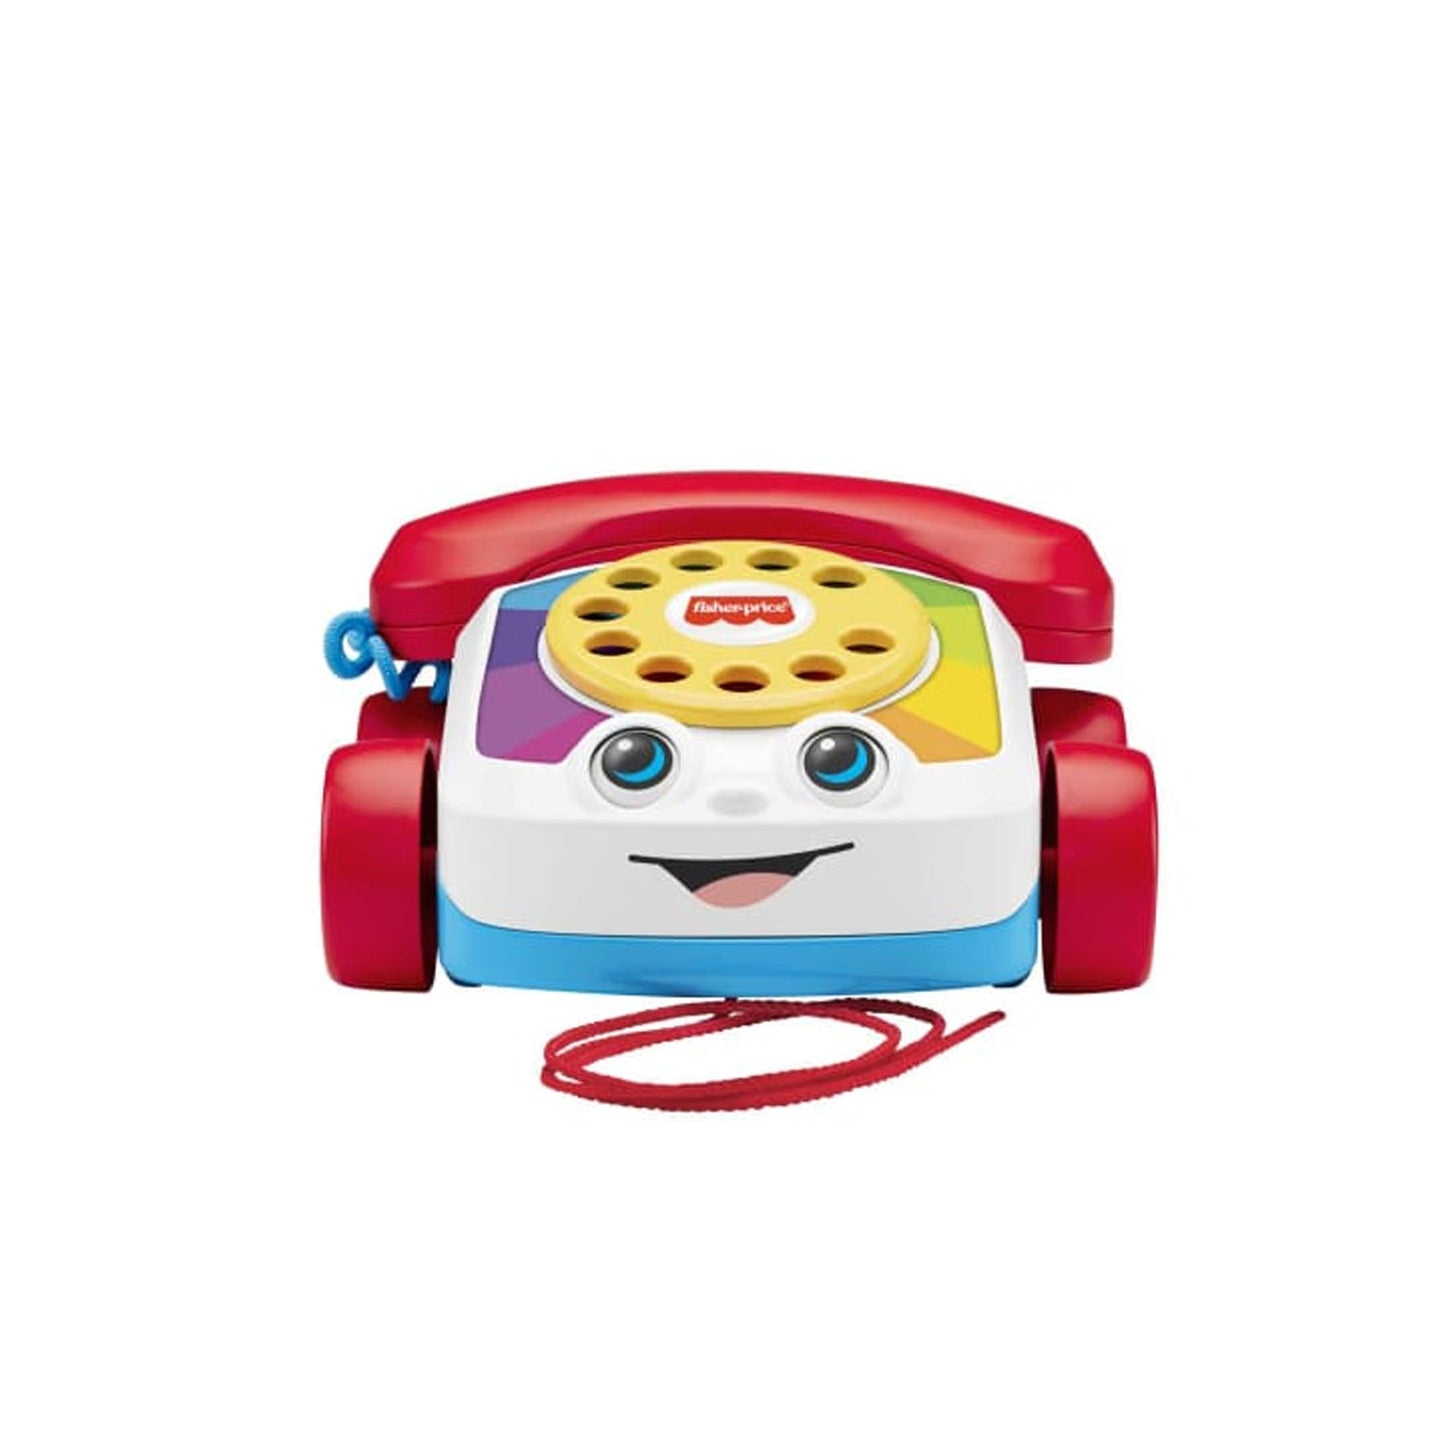 Mattel - Fisher Price Talking Telephone FGW66